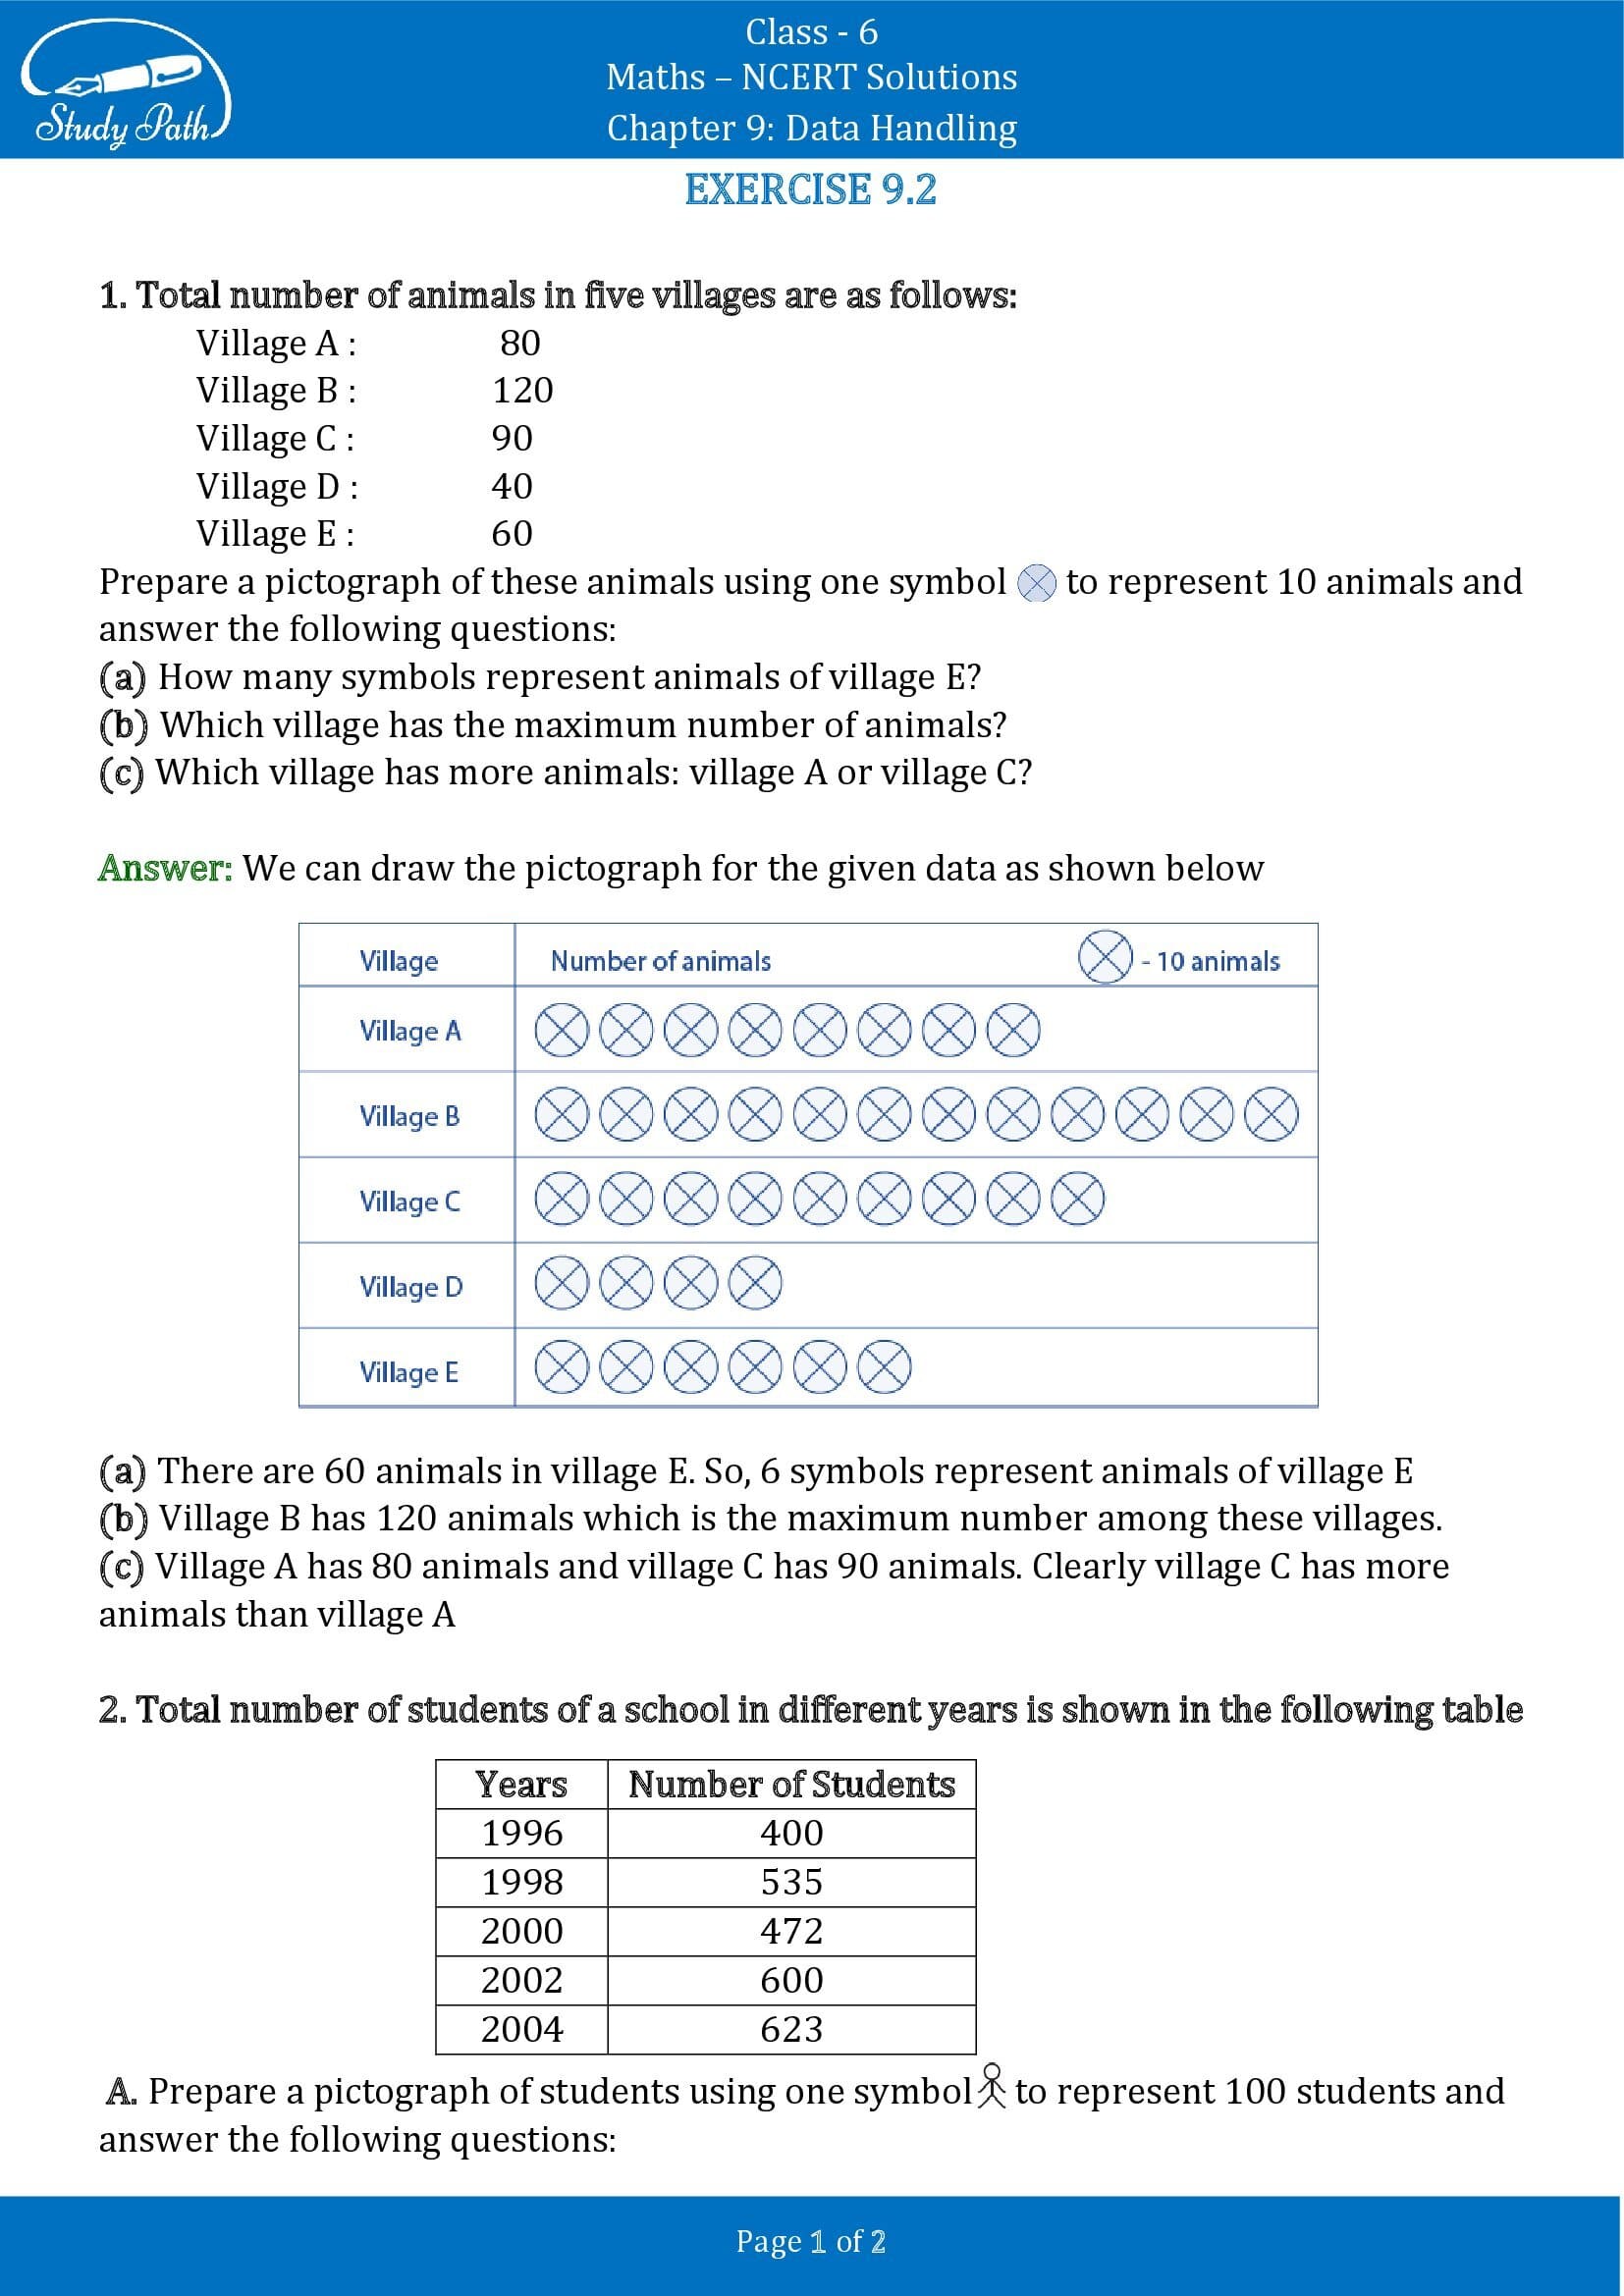 NCERT Solutions for Class 6 Maths Chapter 9 Data Handling Exercise 9.2 00001